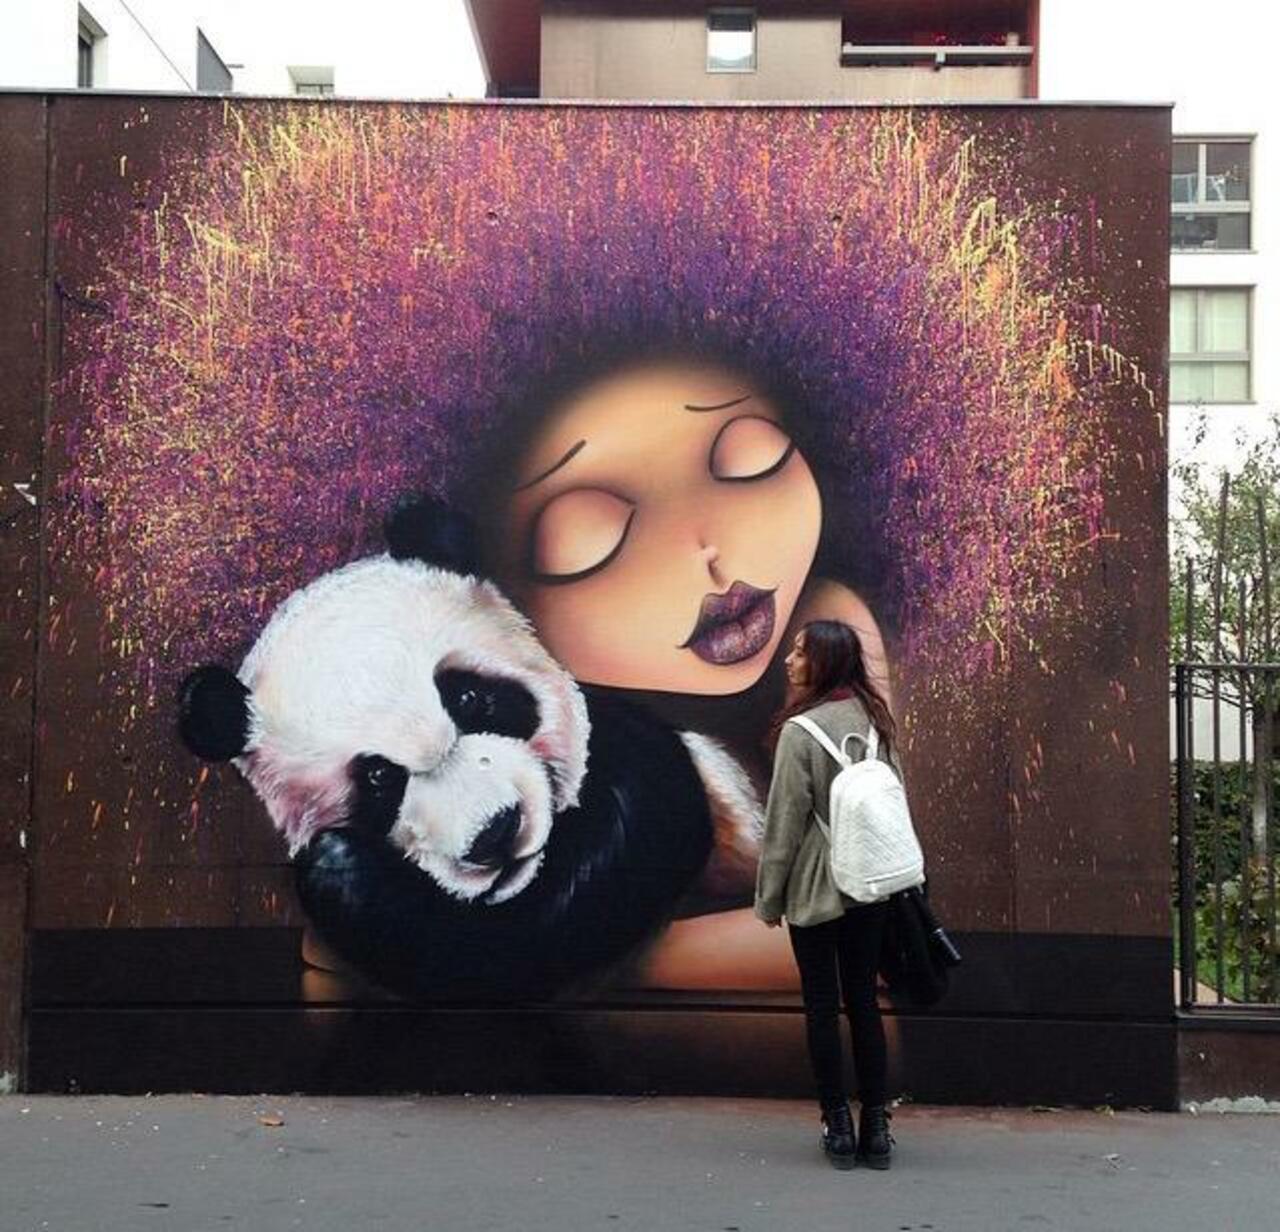 Street Art by VinieGraffiti in Paris 

#art #graffiti #mural #streetart http://t.co/rbKAHIT3OV